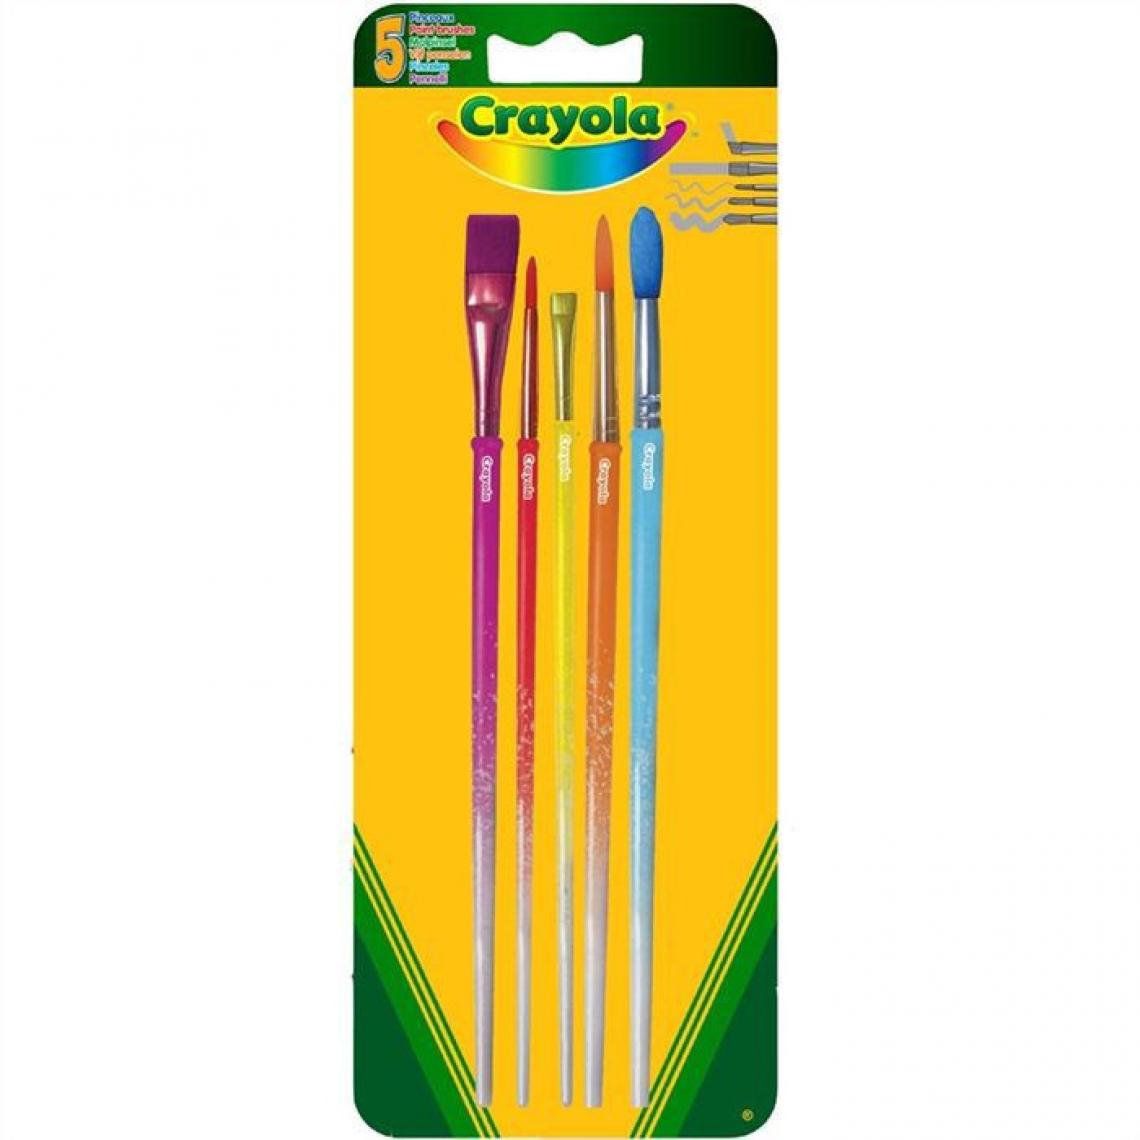 Crayola - Crayola 5 pinceaux assortis - Dessin et peinture